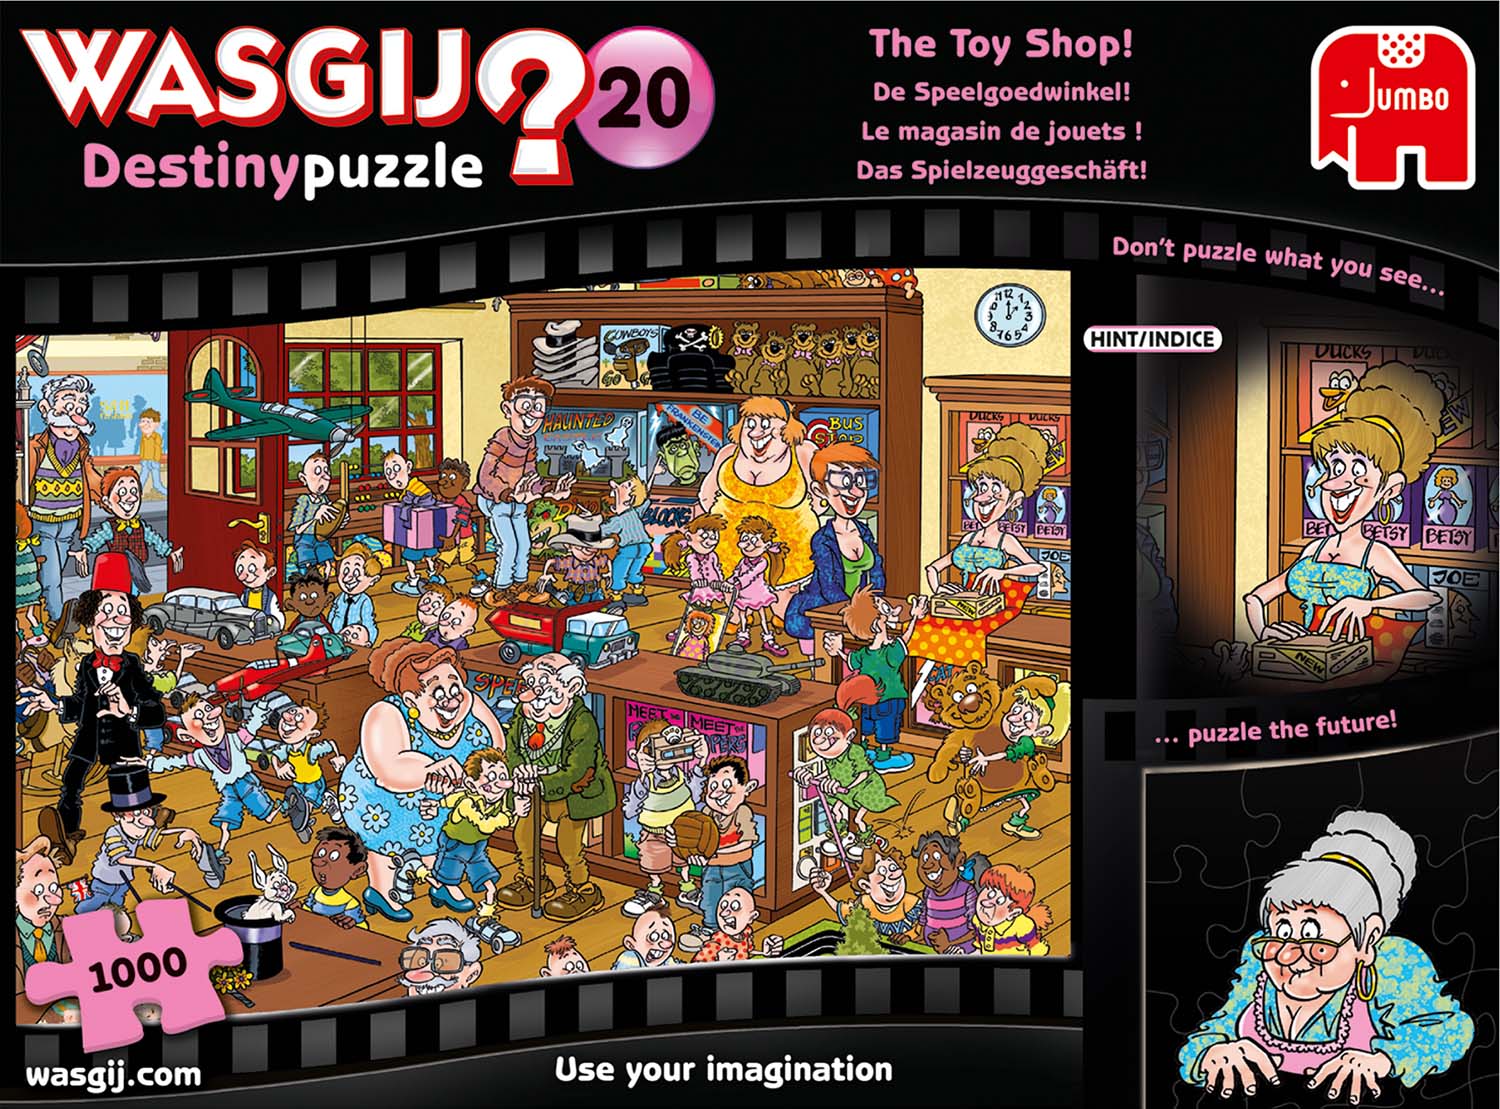 Wasgij Destiny 20: The Toy Shop